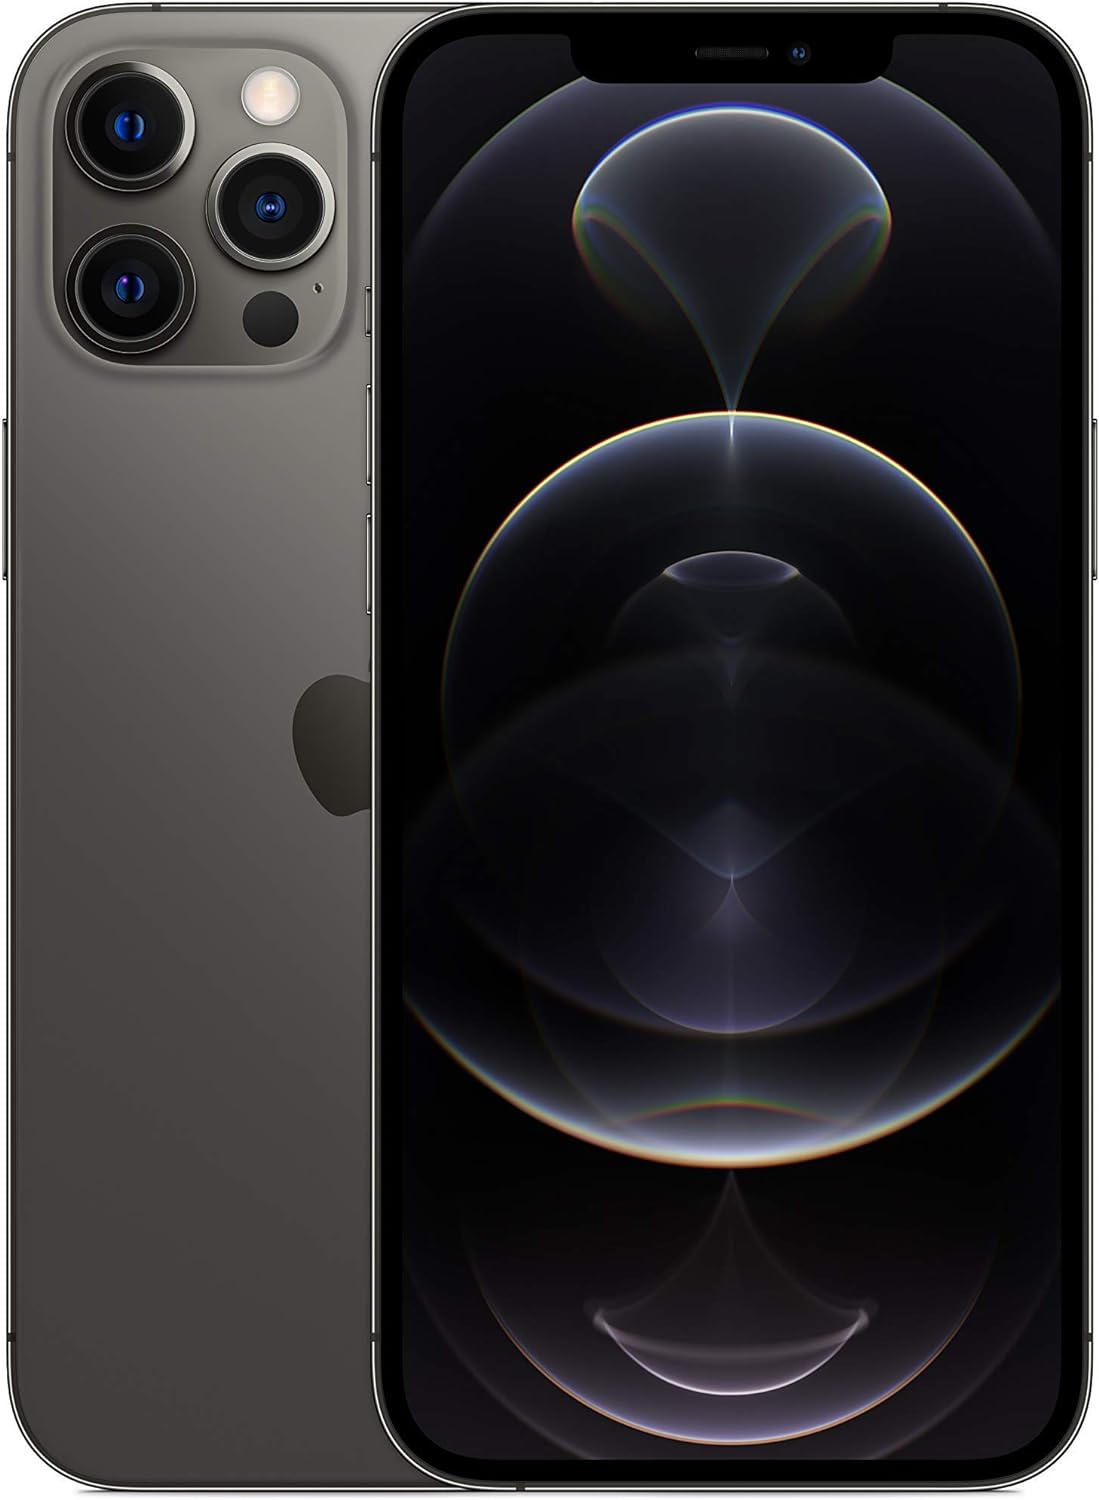 Apple iPhone 12 Pro Max (256GB) - Pacific Blue (Renewed)